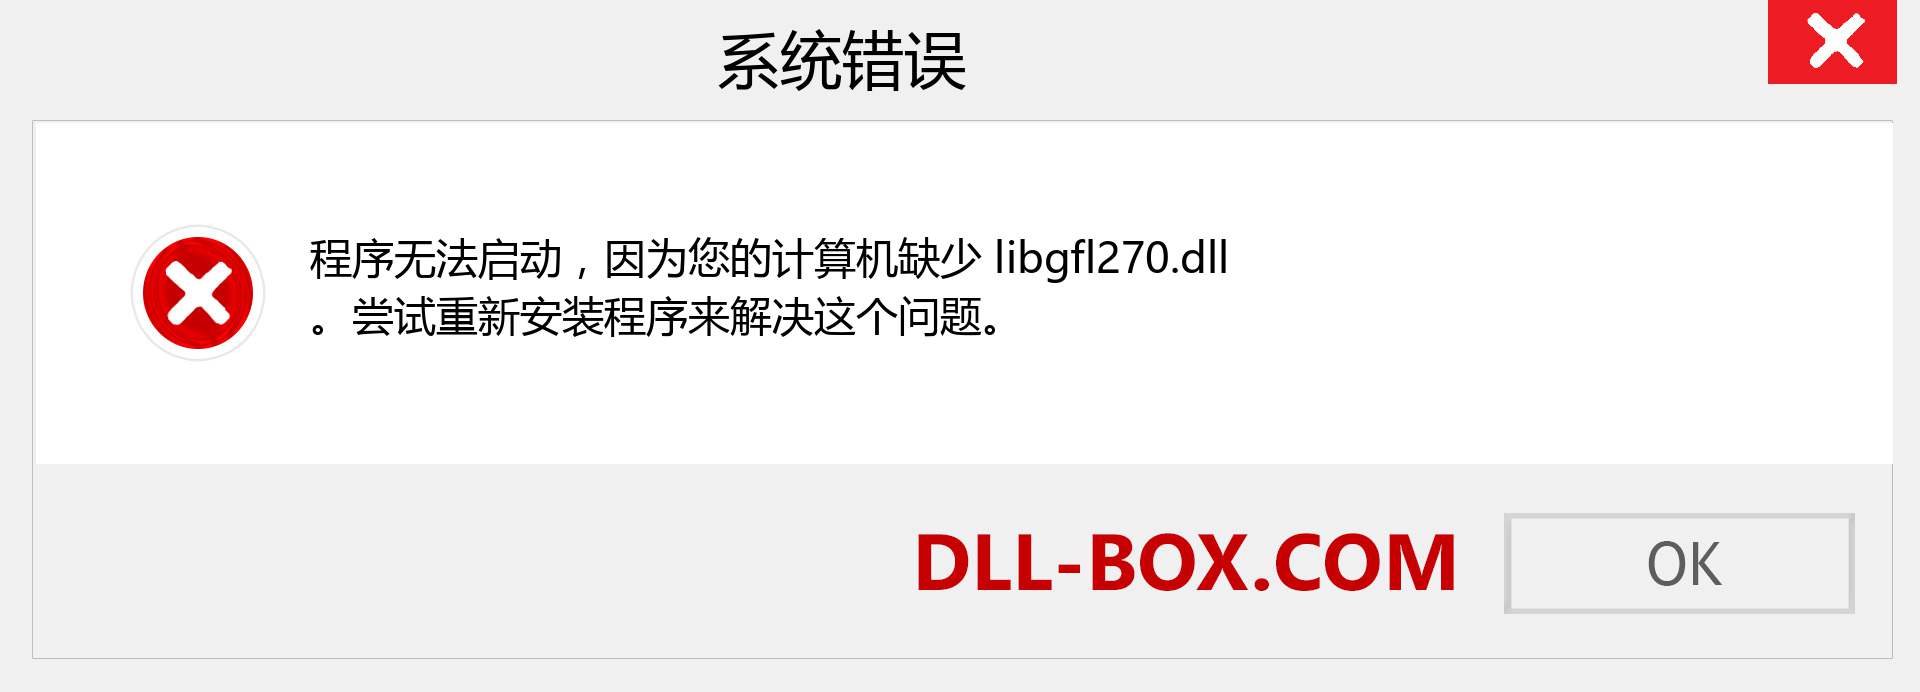 libgfl270.dll 文件丢失？。 适用于 Windows 7、8、10 的下载 - 修复 Windows、照片、图像上的 libgfl270 dll 丢失错误